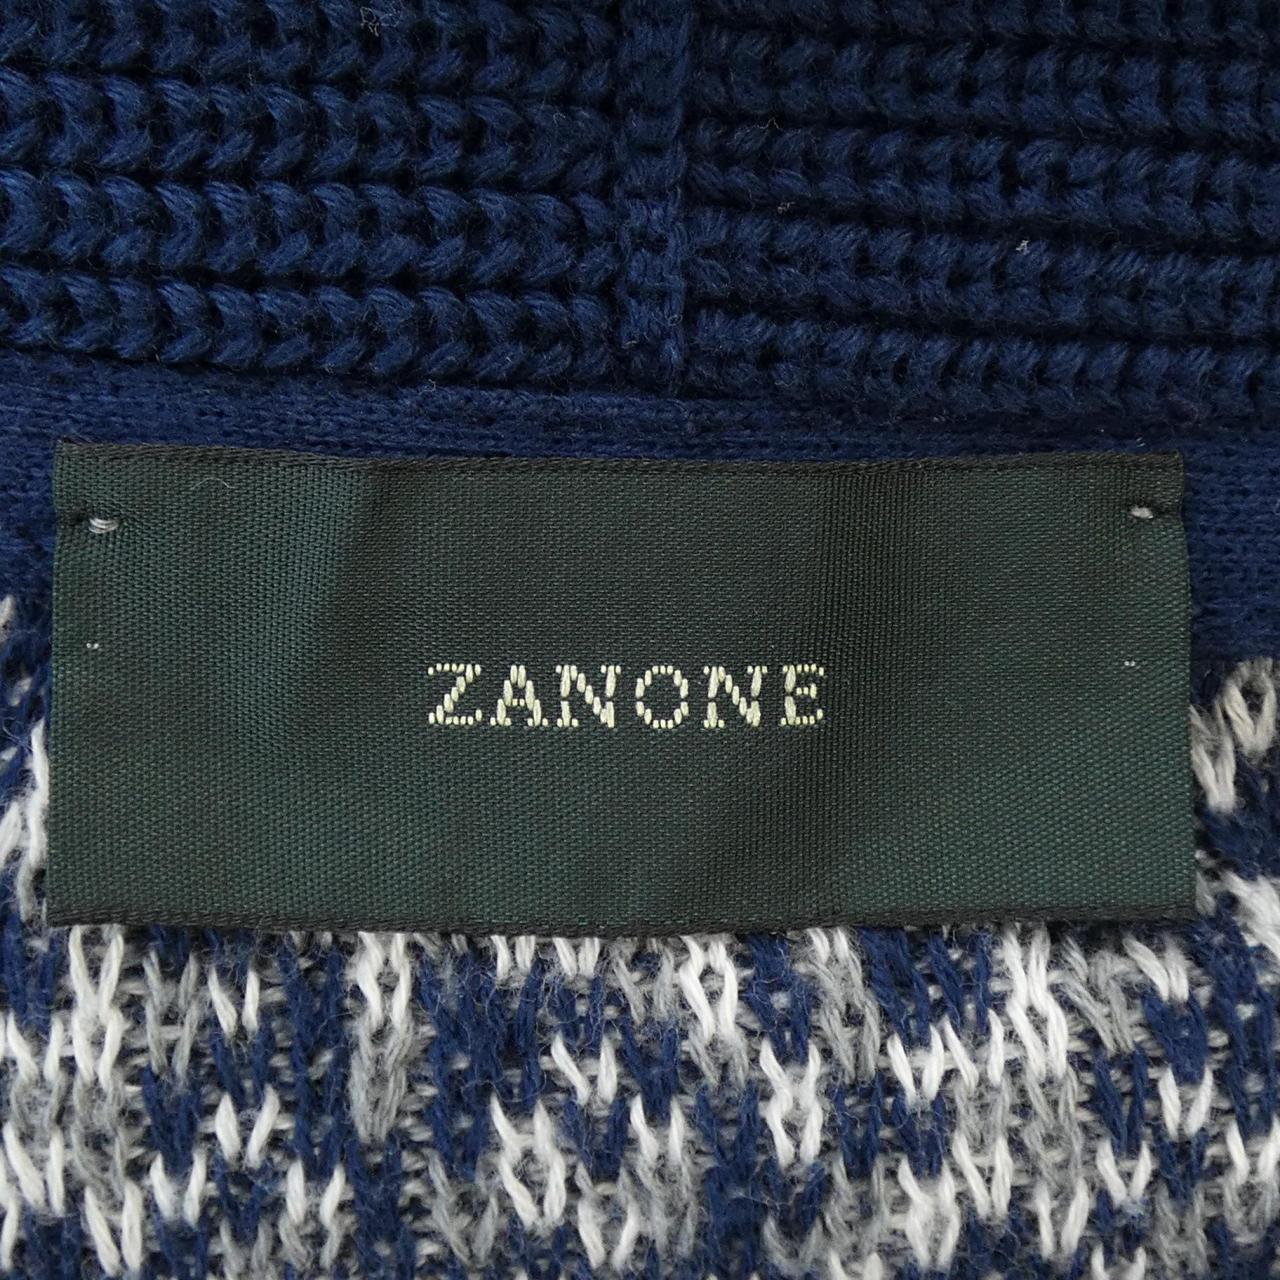 Zanone ZANONE cardigan